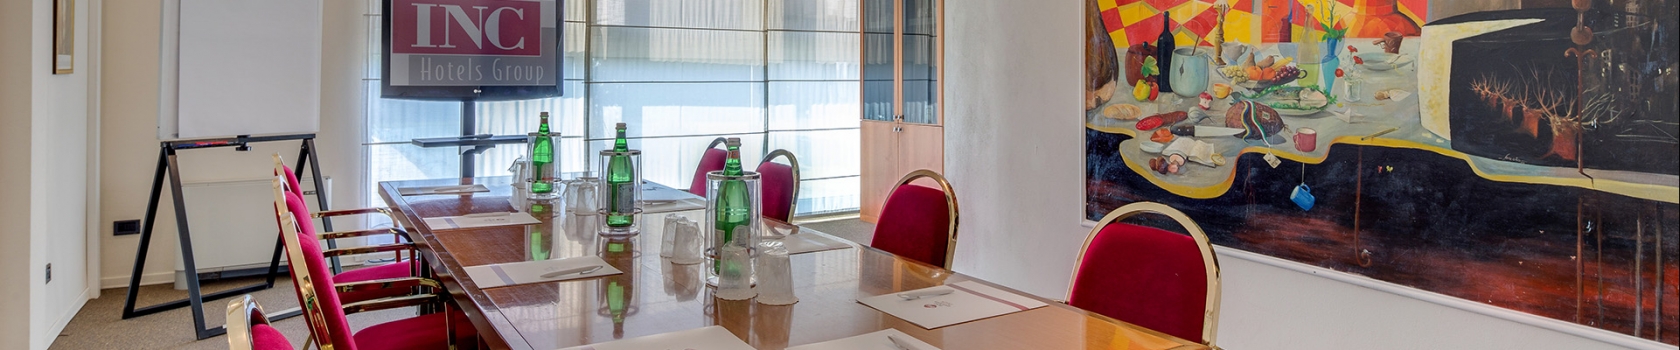 Prenota la tua sala meeting in hotel a Parma